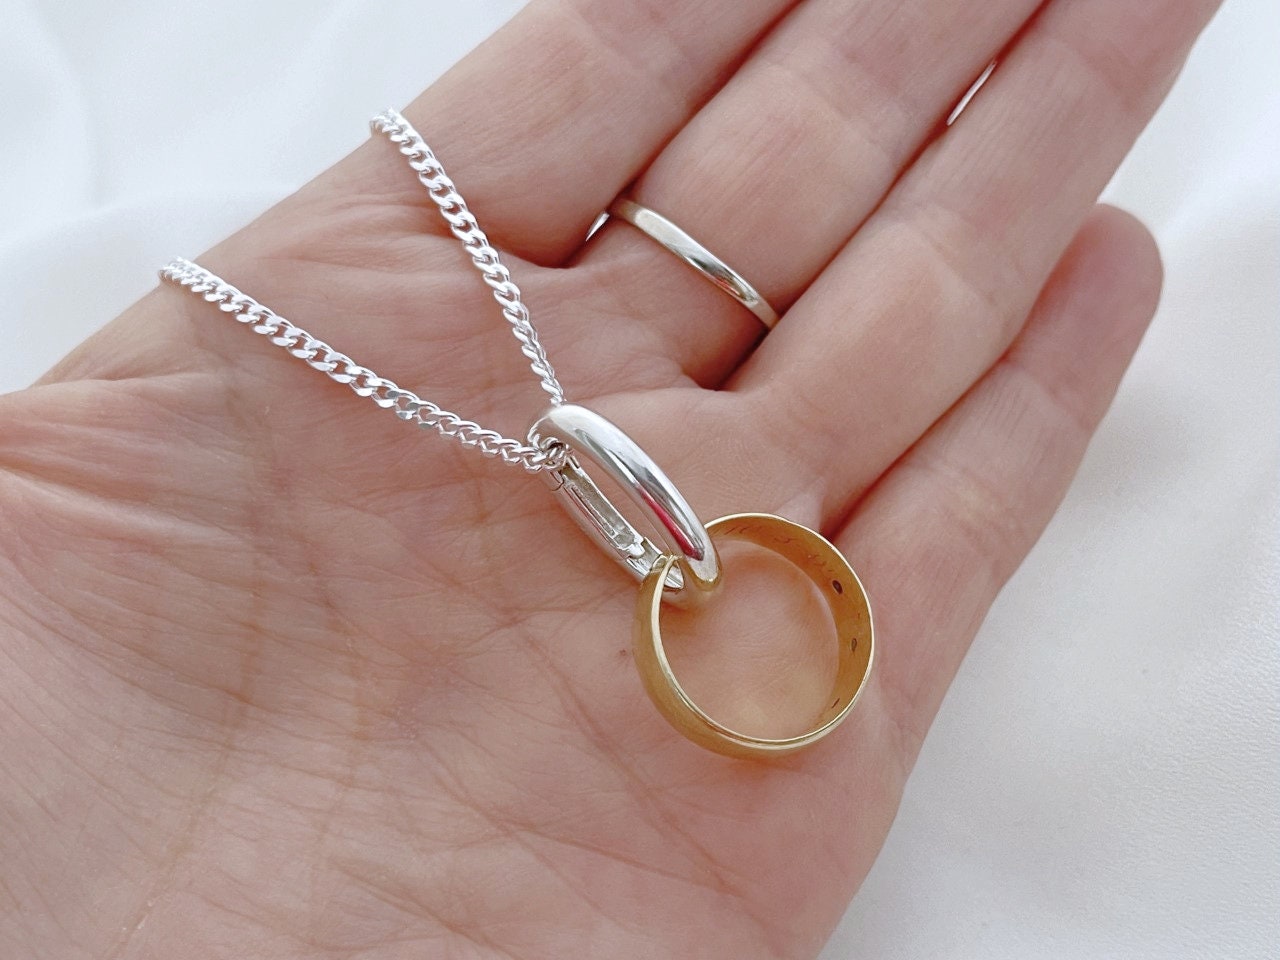 Ring holder necklace – Sarah Munnings Jewellery